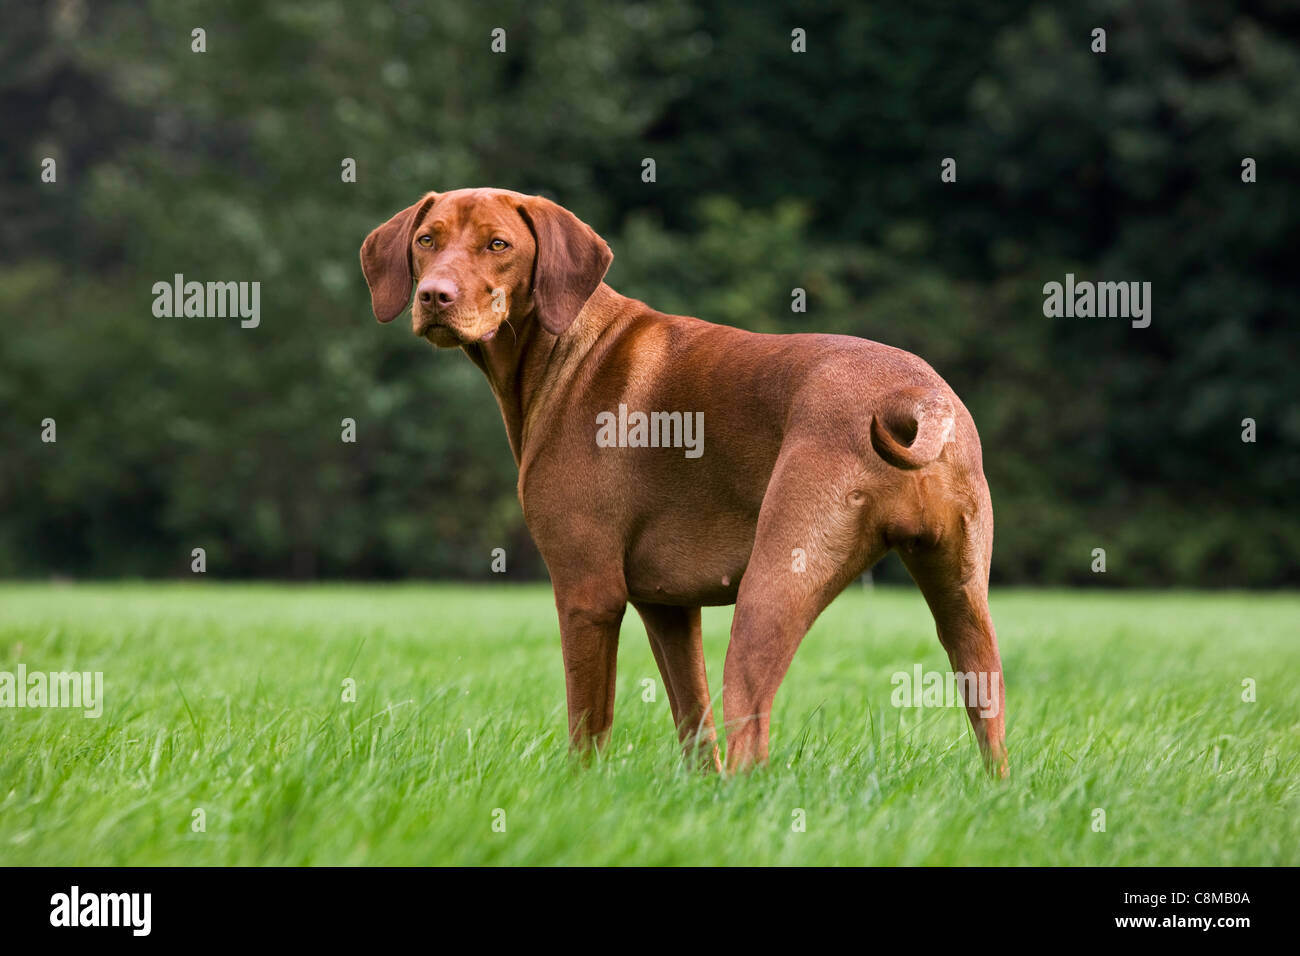 Hungarian Vizsla hunting dog with golden rust coat (Canis lupus familiaris) in garden, Belgium Stock Photo